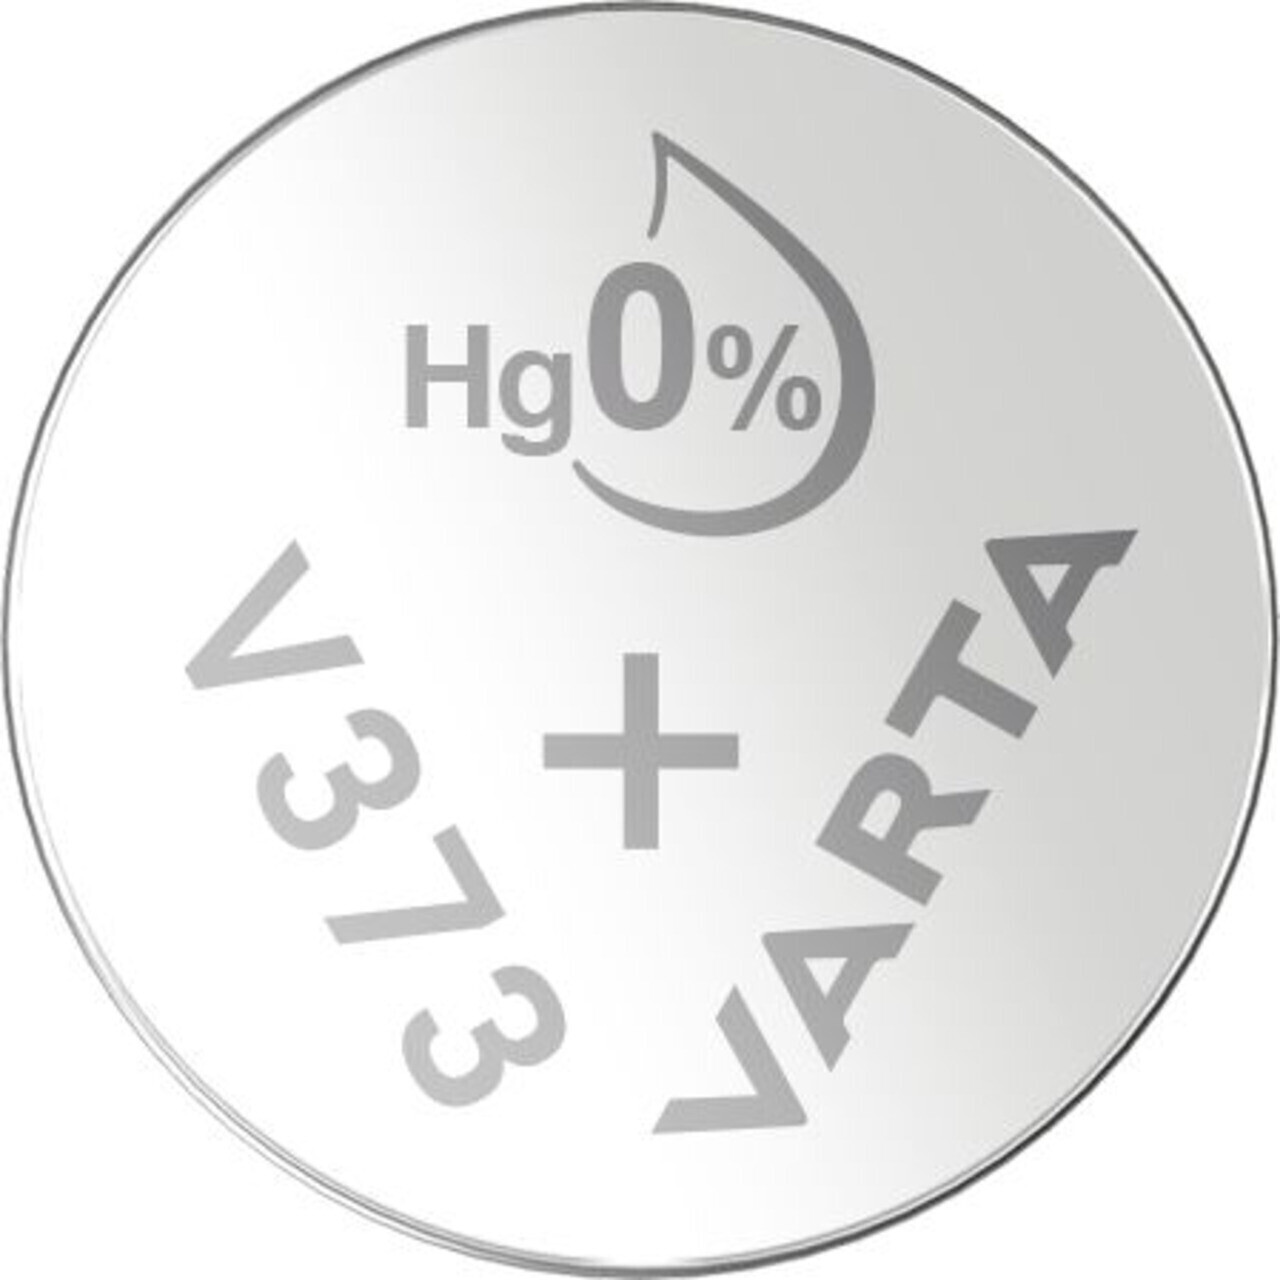 VARTA Pile bouton lithium CR2430 3V 280 mAh Professional au